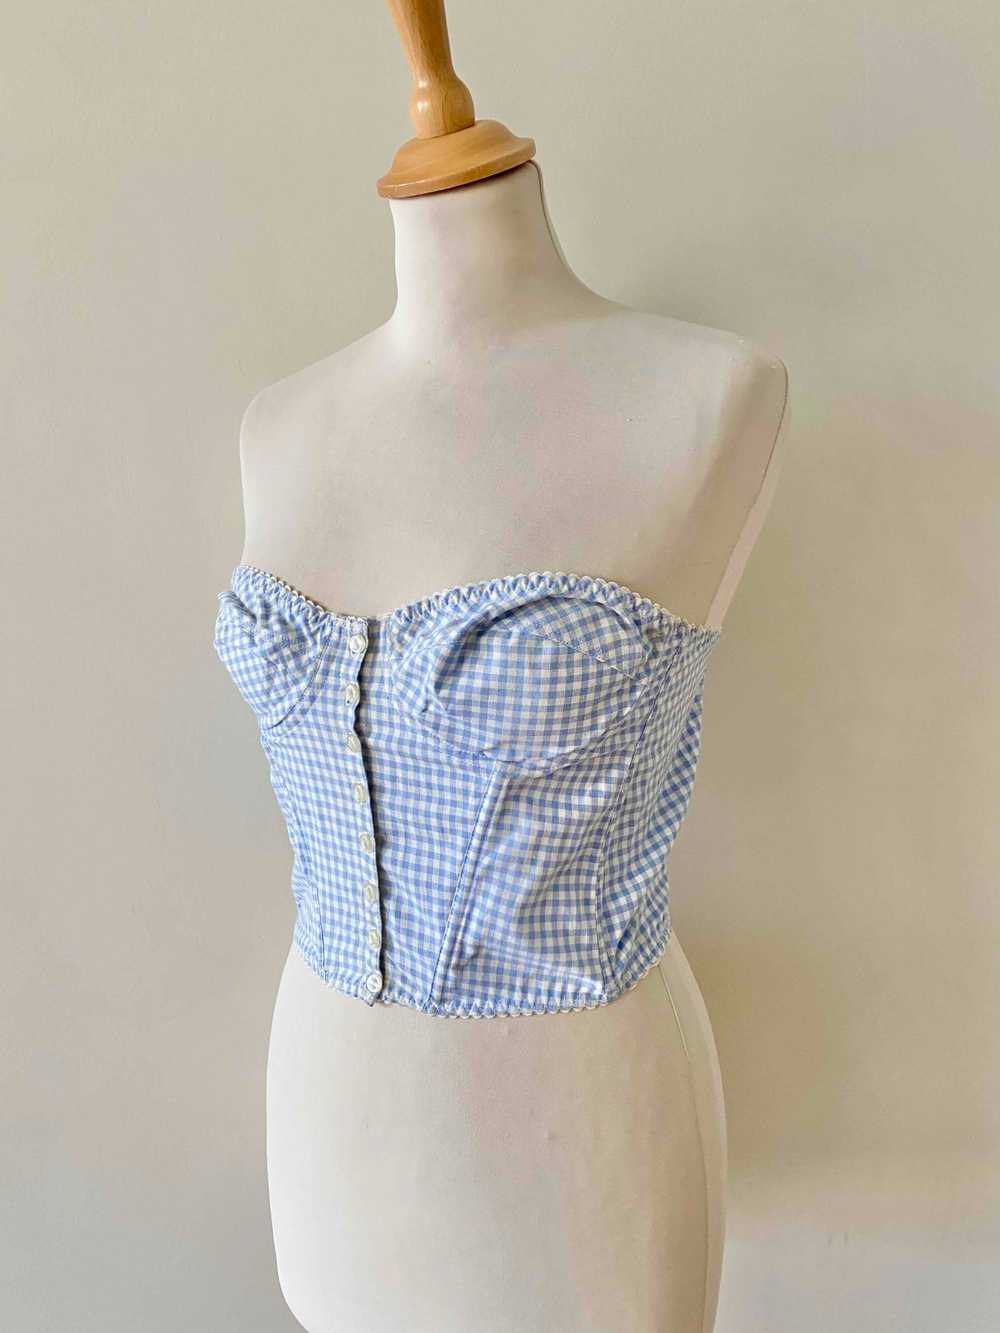 Gingham Bustier Corset - Bustier Gingham corset, … - image 3